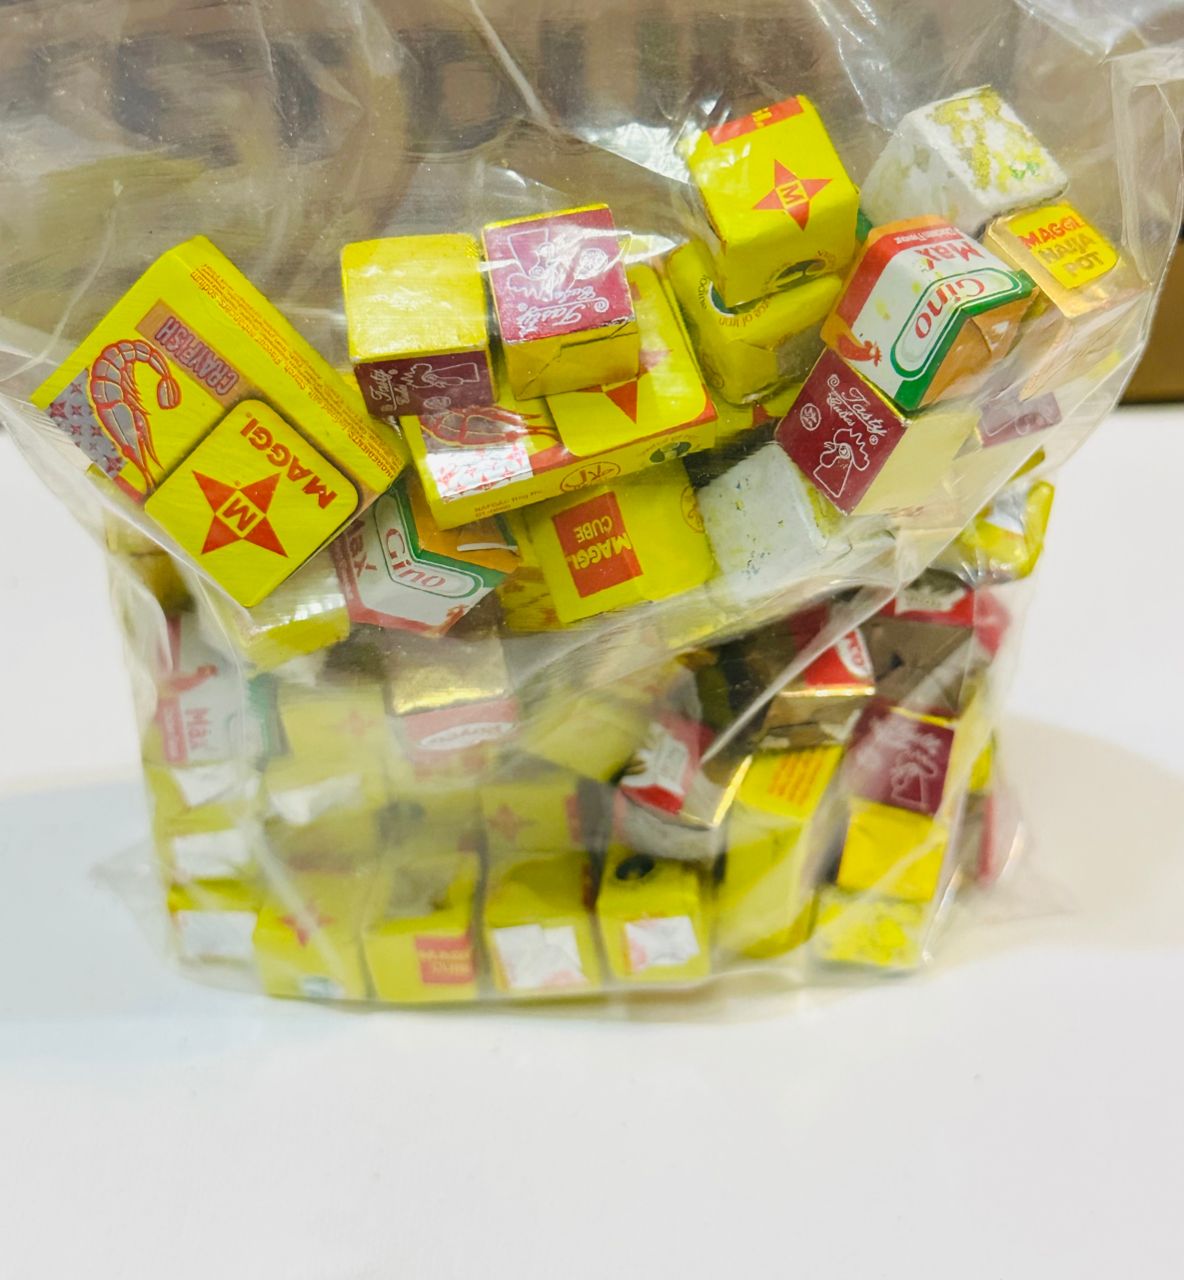 Assorted Mix Of Maggi Seasoning Cubes 100 Pcs